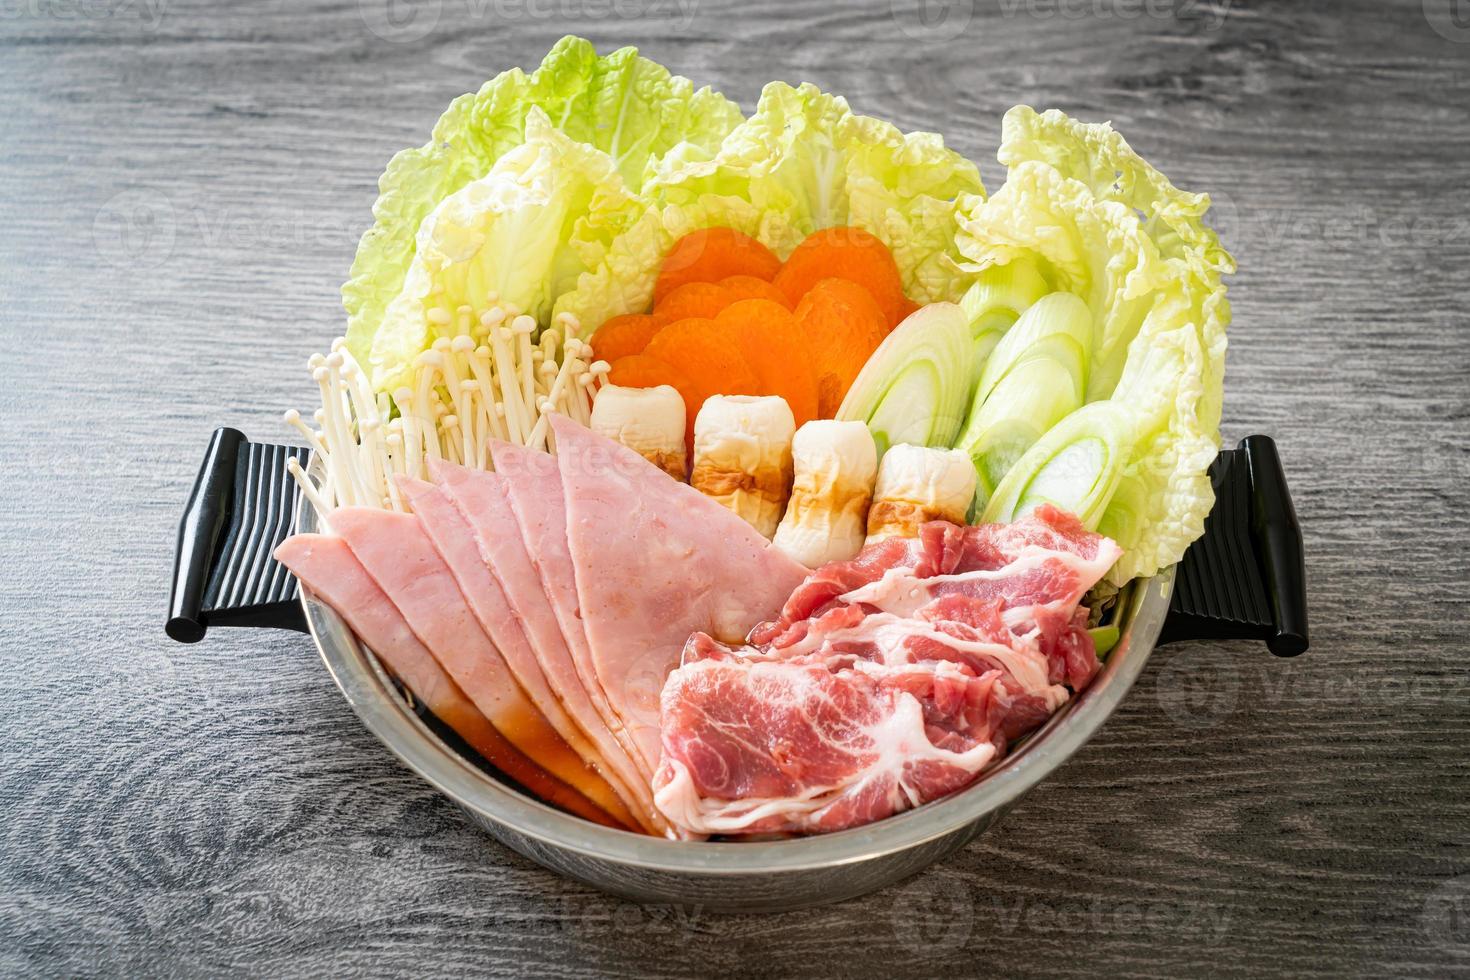 zuppa nera sukiyaki o shabu con carne cruda e verdure - stile alimentare giapponese foto